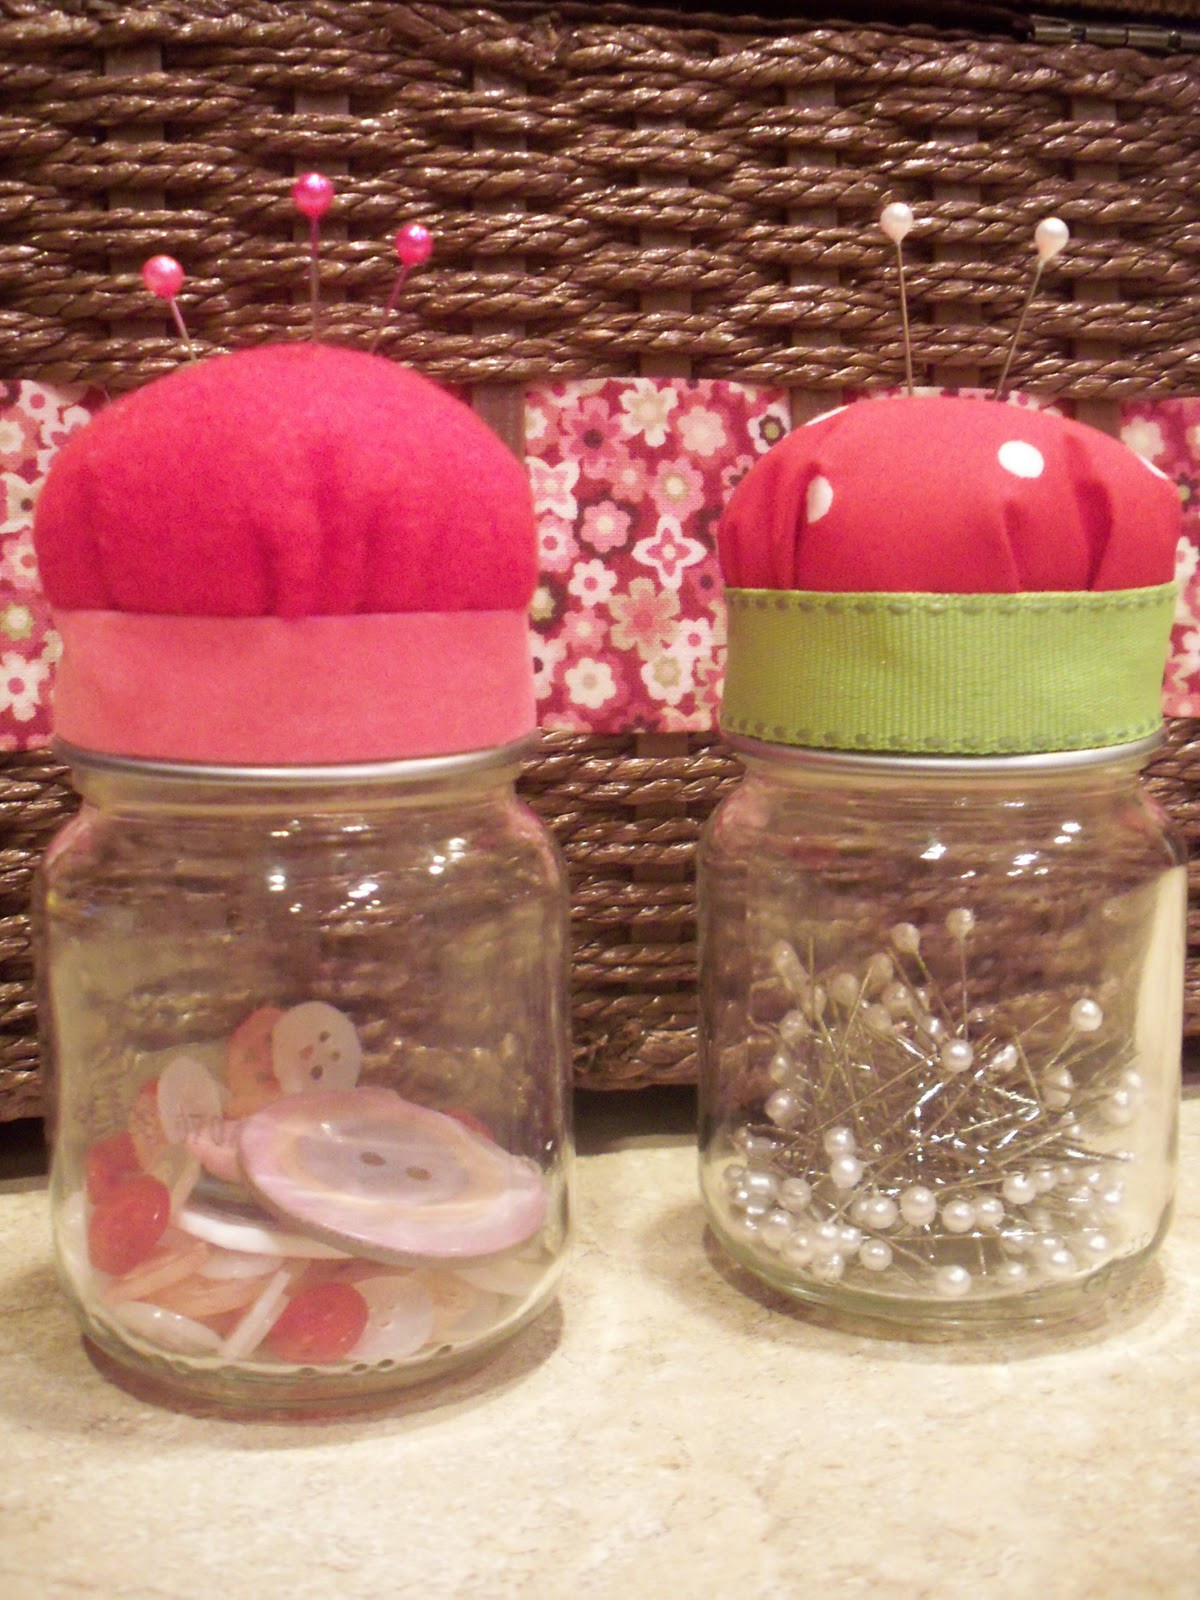 Baby Jar Crafts
 The Life of Jennifer Dawn Baby Food Jar Pincushions